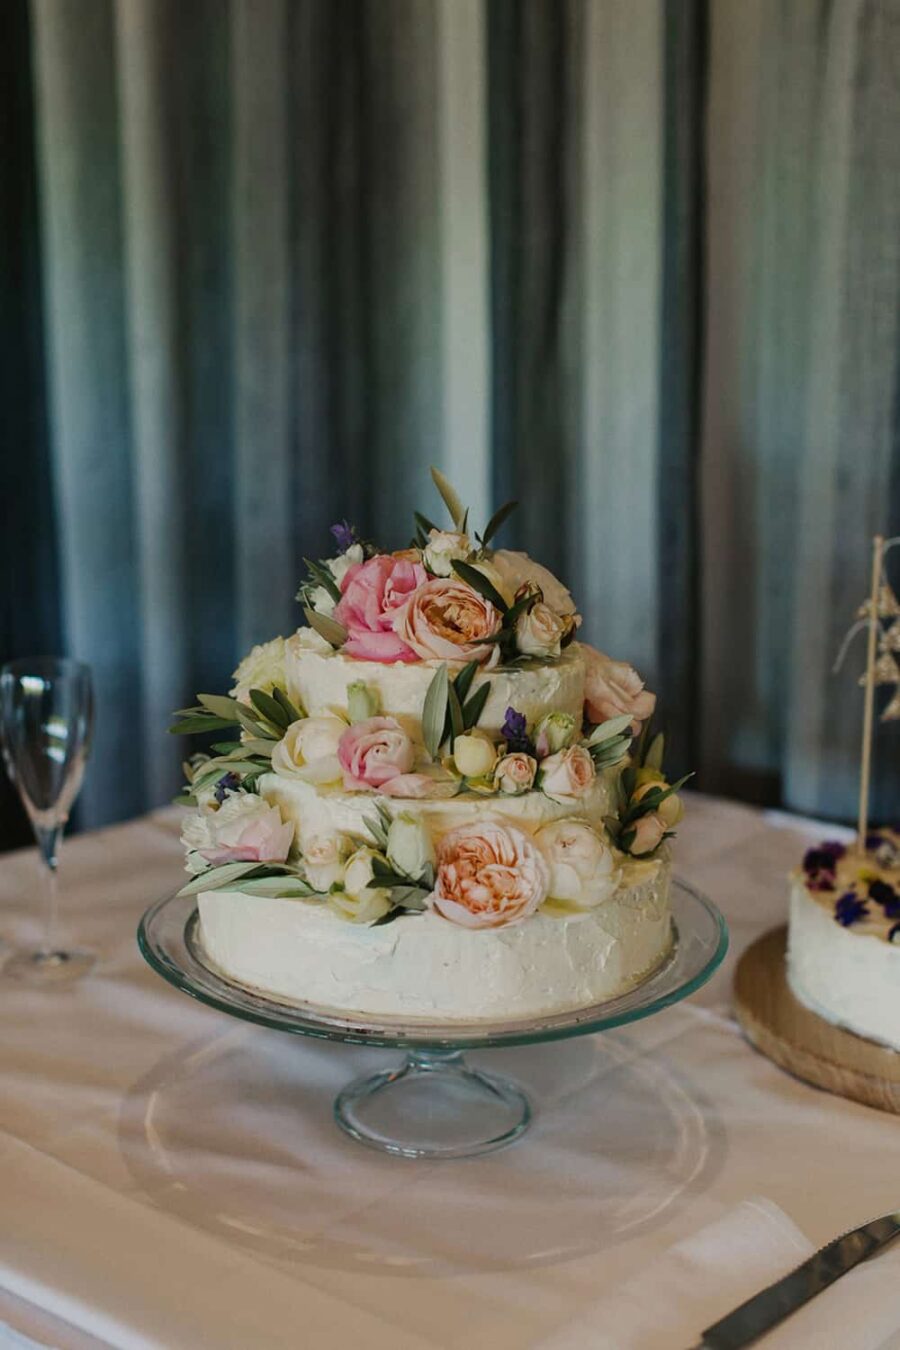 homemade wedding cake with fresh rose